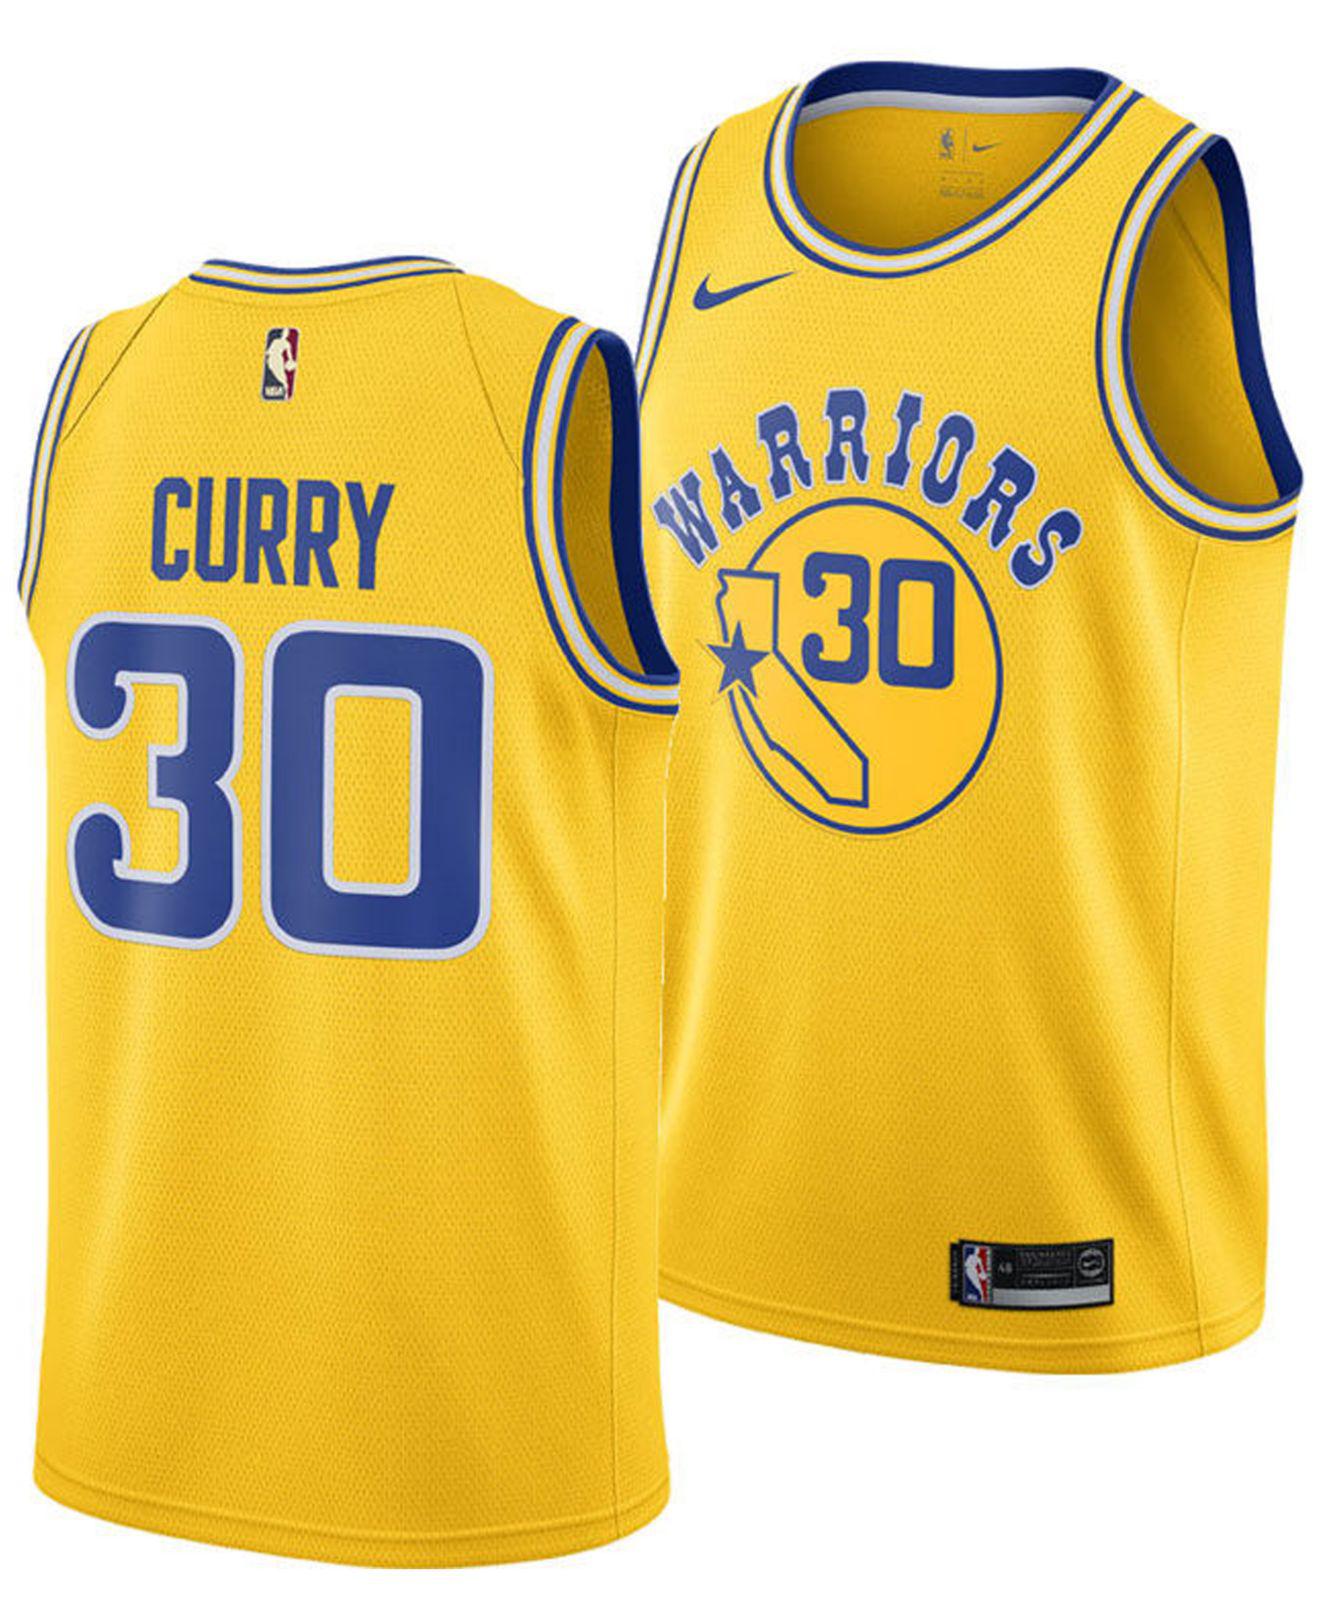 Warriors Jersey Yellow - Stephen Curry #30 Golden State Warriors